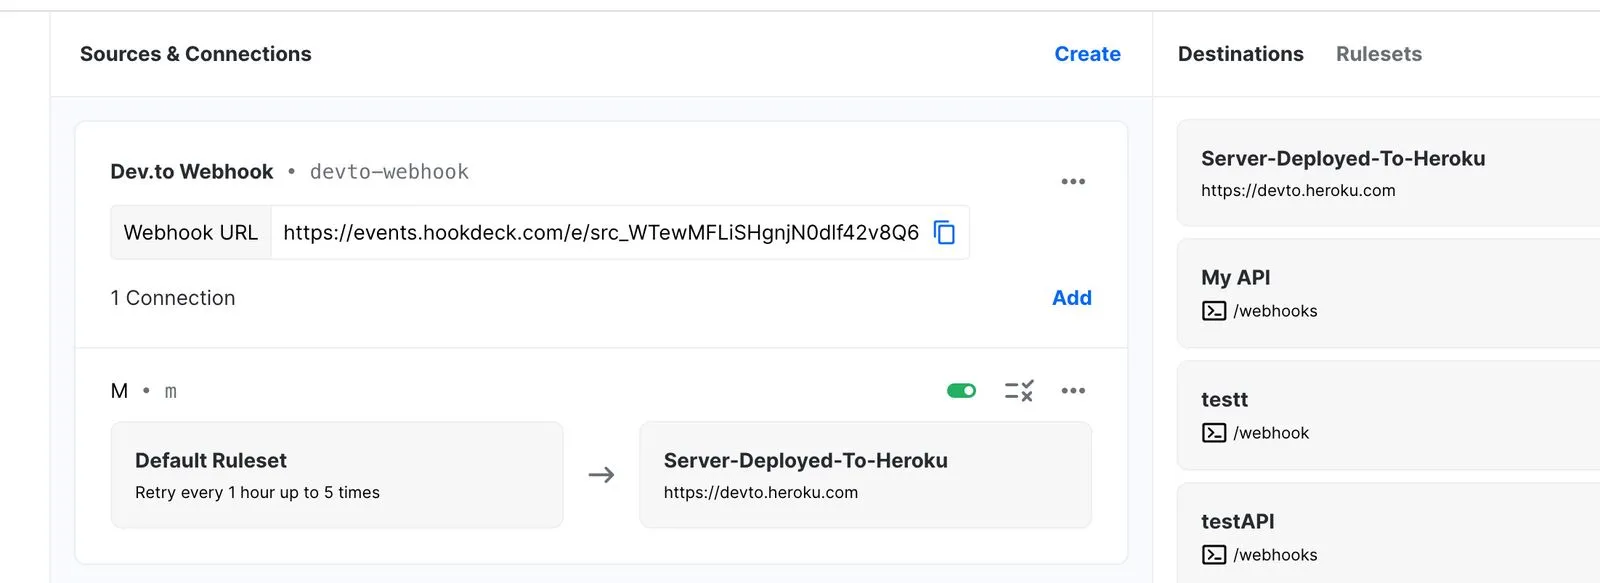 Hookdeck connection for Dev.to service